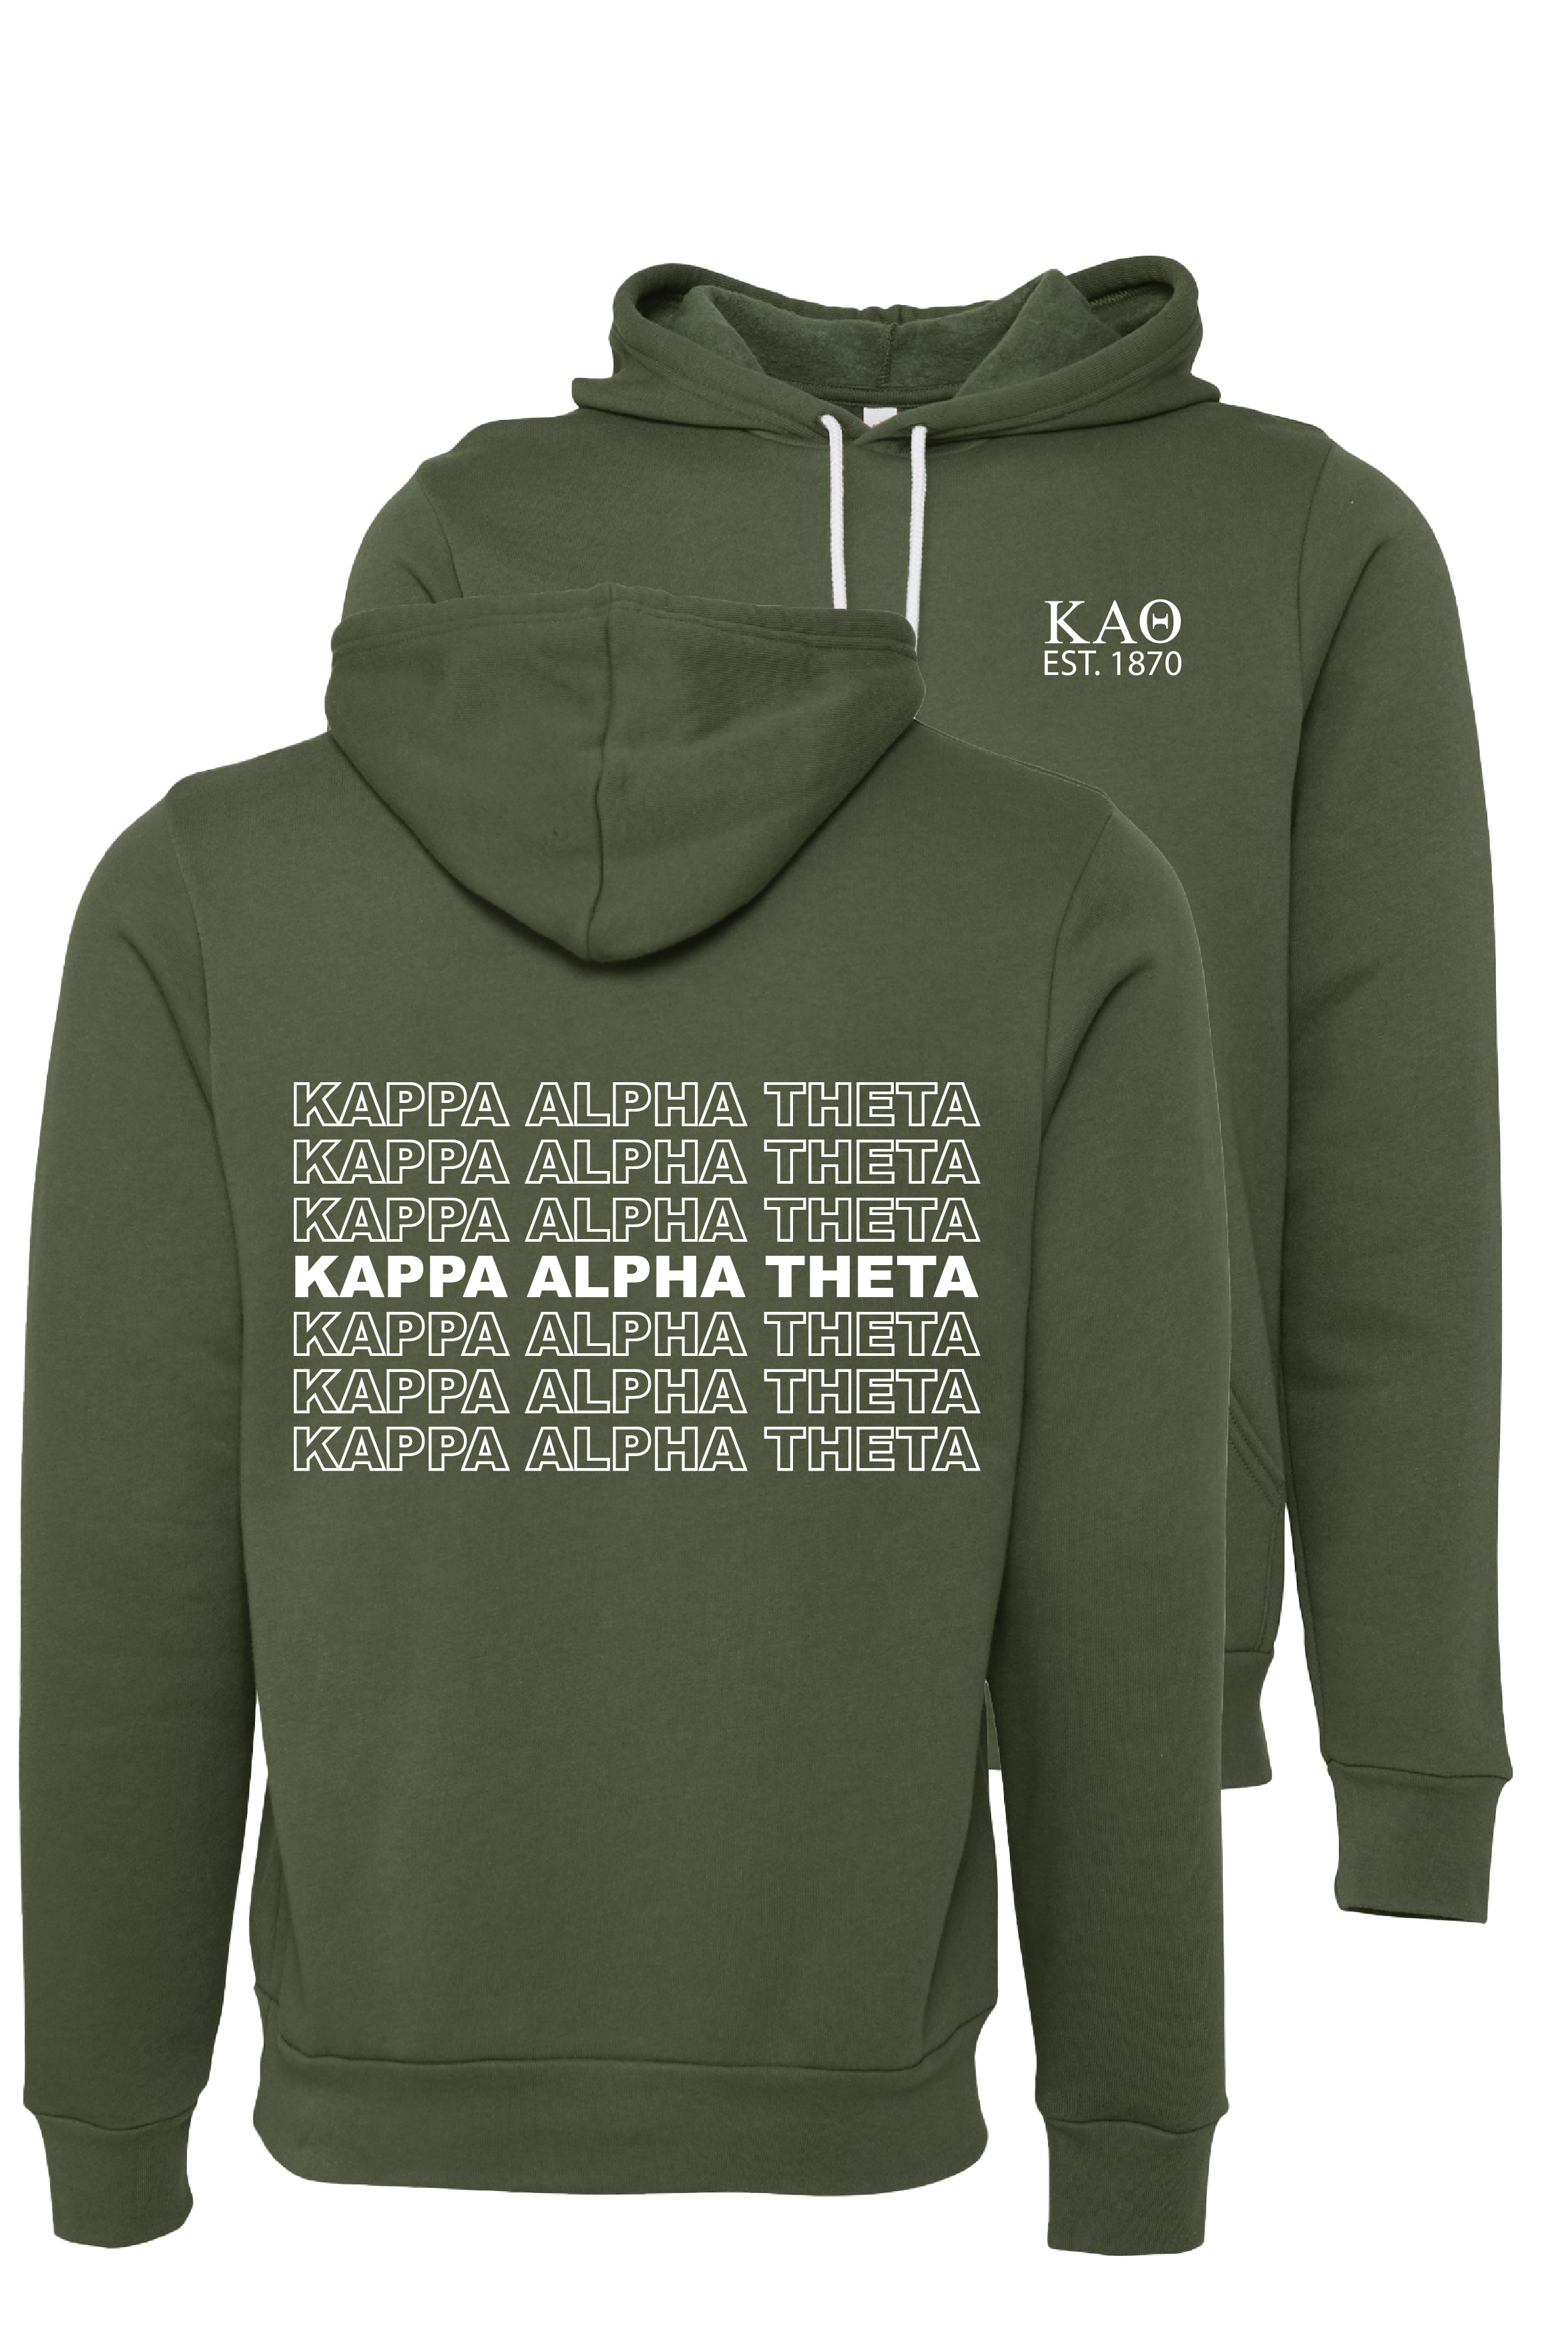 Kappa Alpha Theta Name Hooded Sweatshirts – Graduate